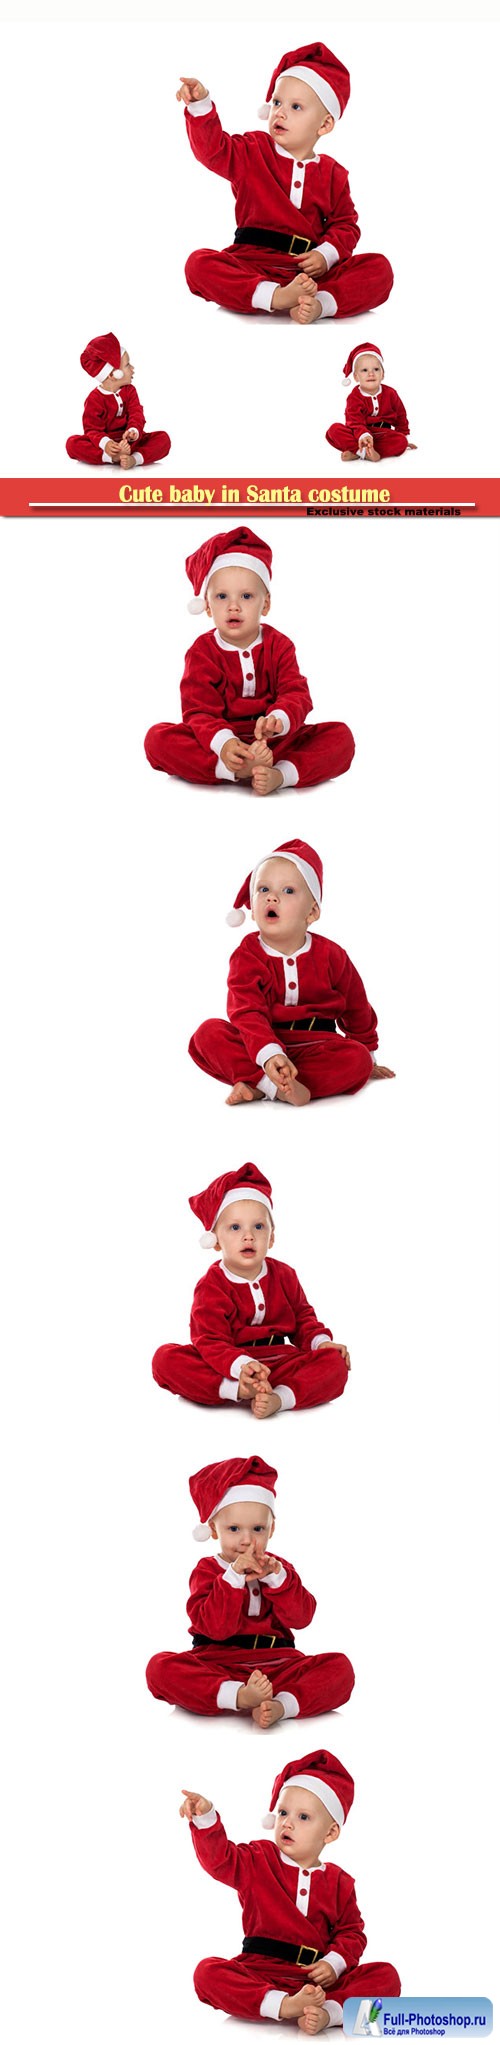 Cute baby in Santa costume